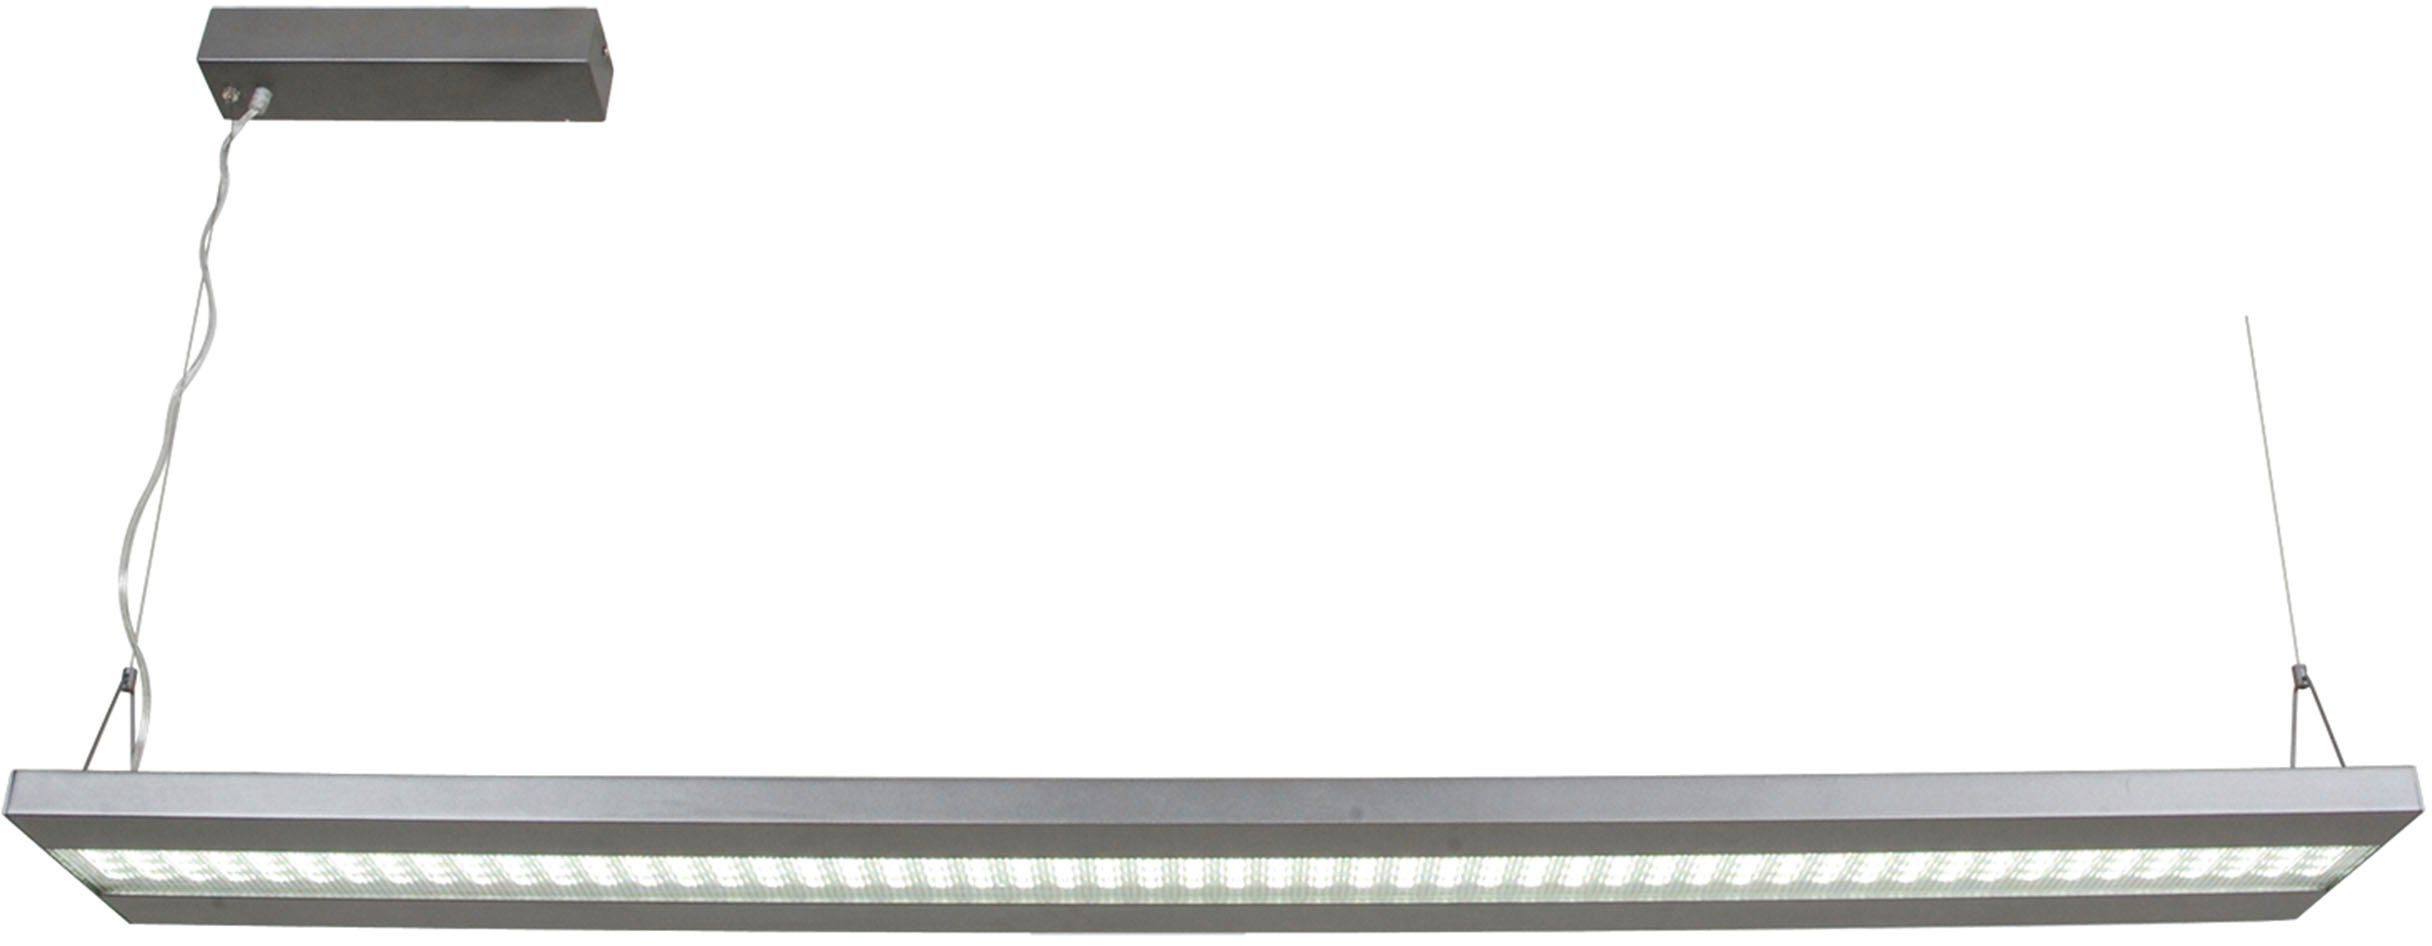 näve LED Pendelleuchte integriert, 80cm L: Lichtfarbe B: Kaltweiß, Bennet, silber LED Büro/Arbeitszimmer fest kaltweiß 30cm